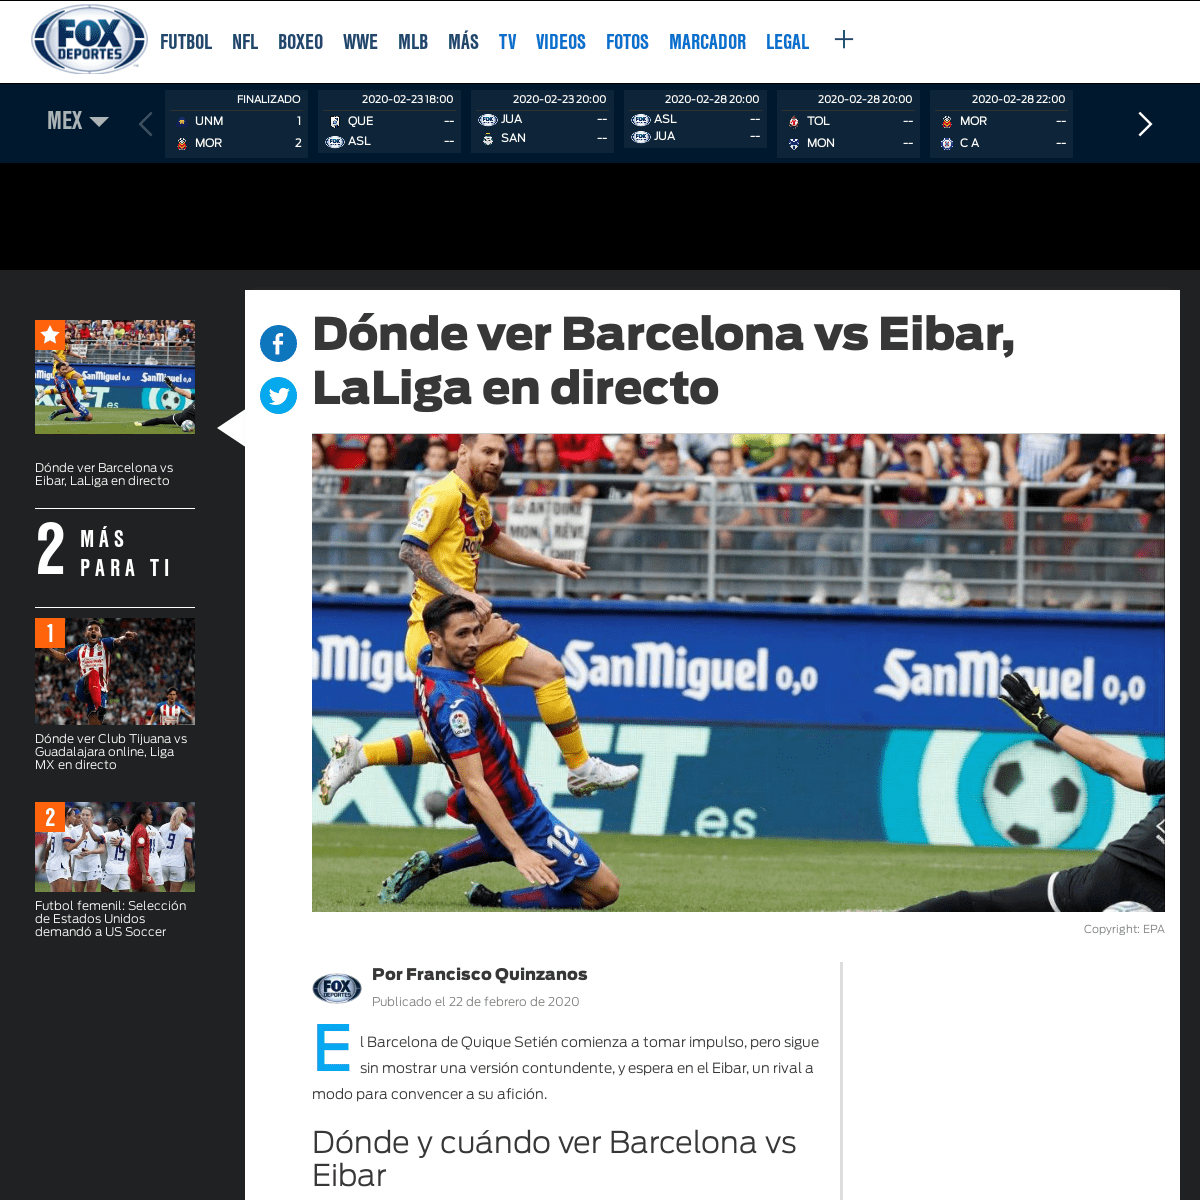 A complete backup of www.foxdeportes.com/futbol/story/donde-ver-barcelona-vs-eibar-laliga-en-directo/